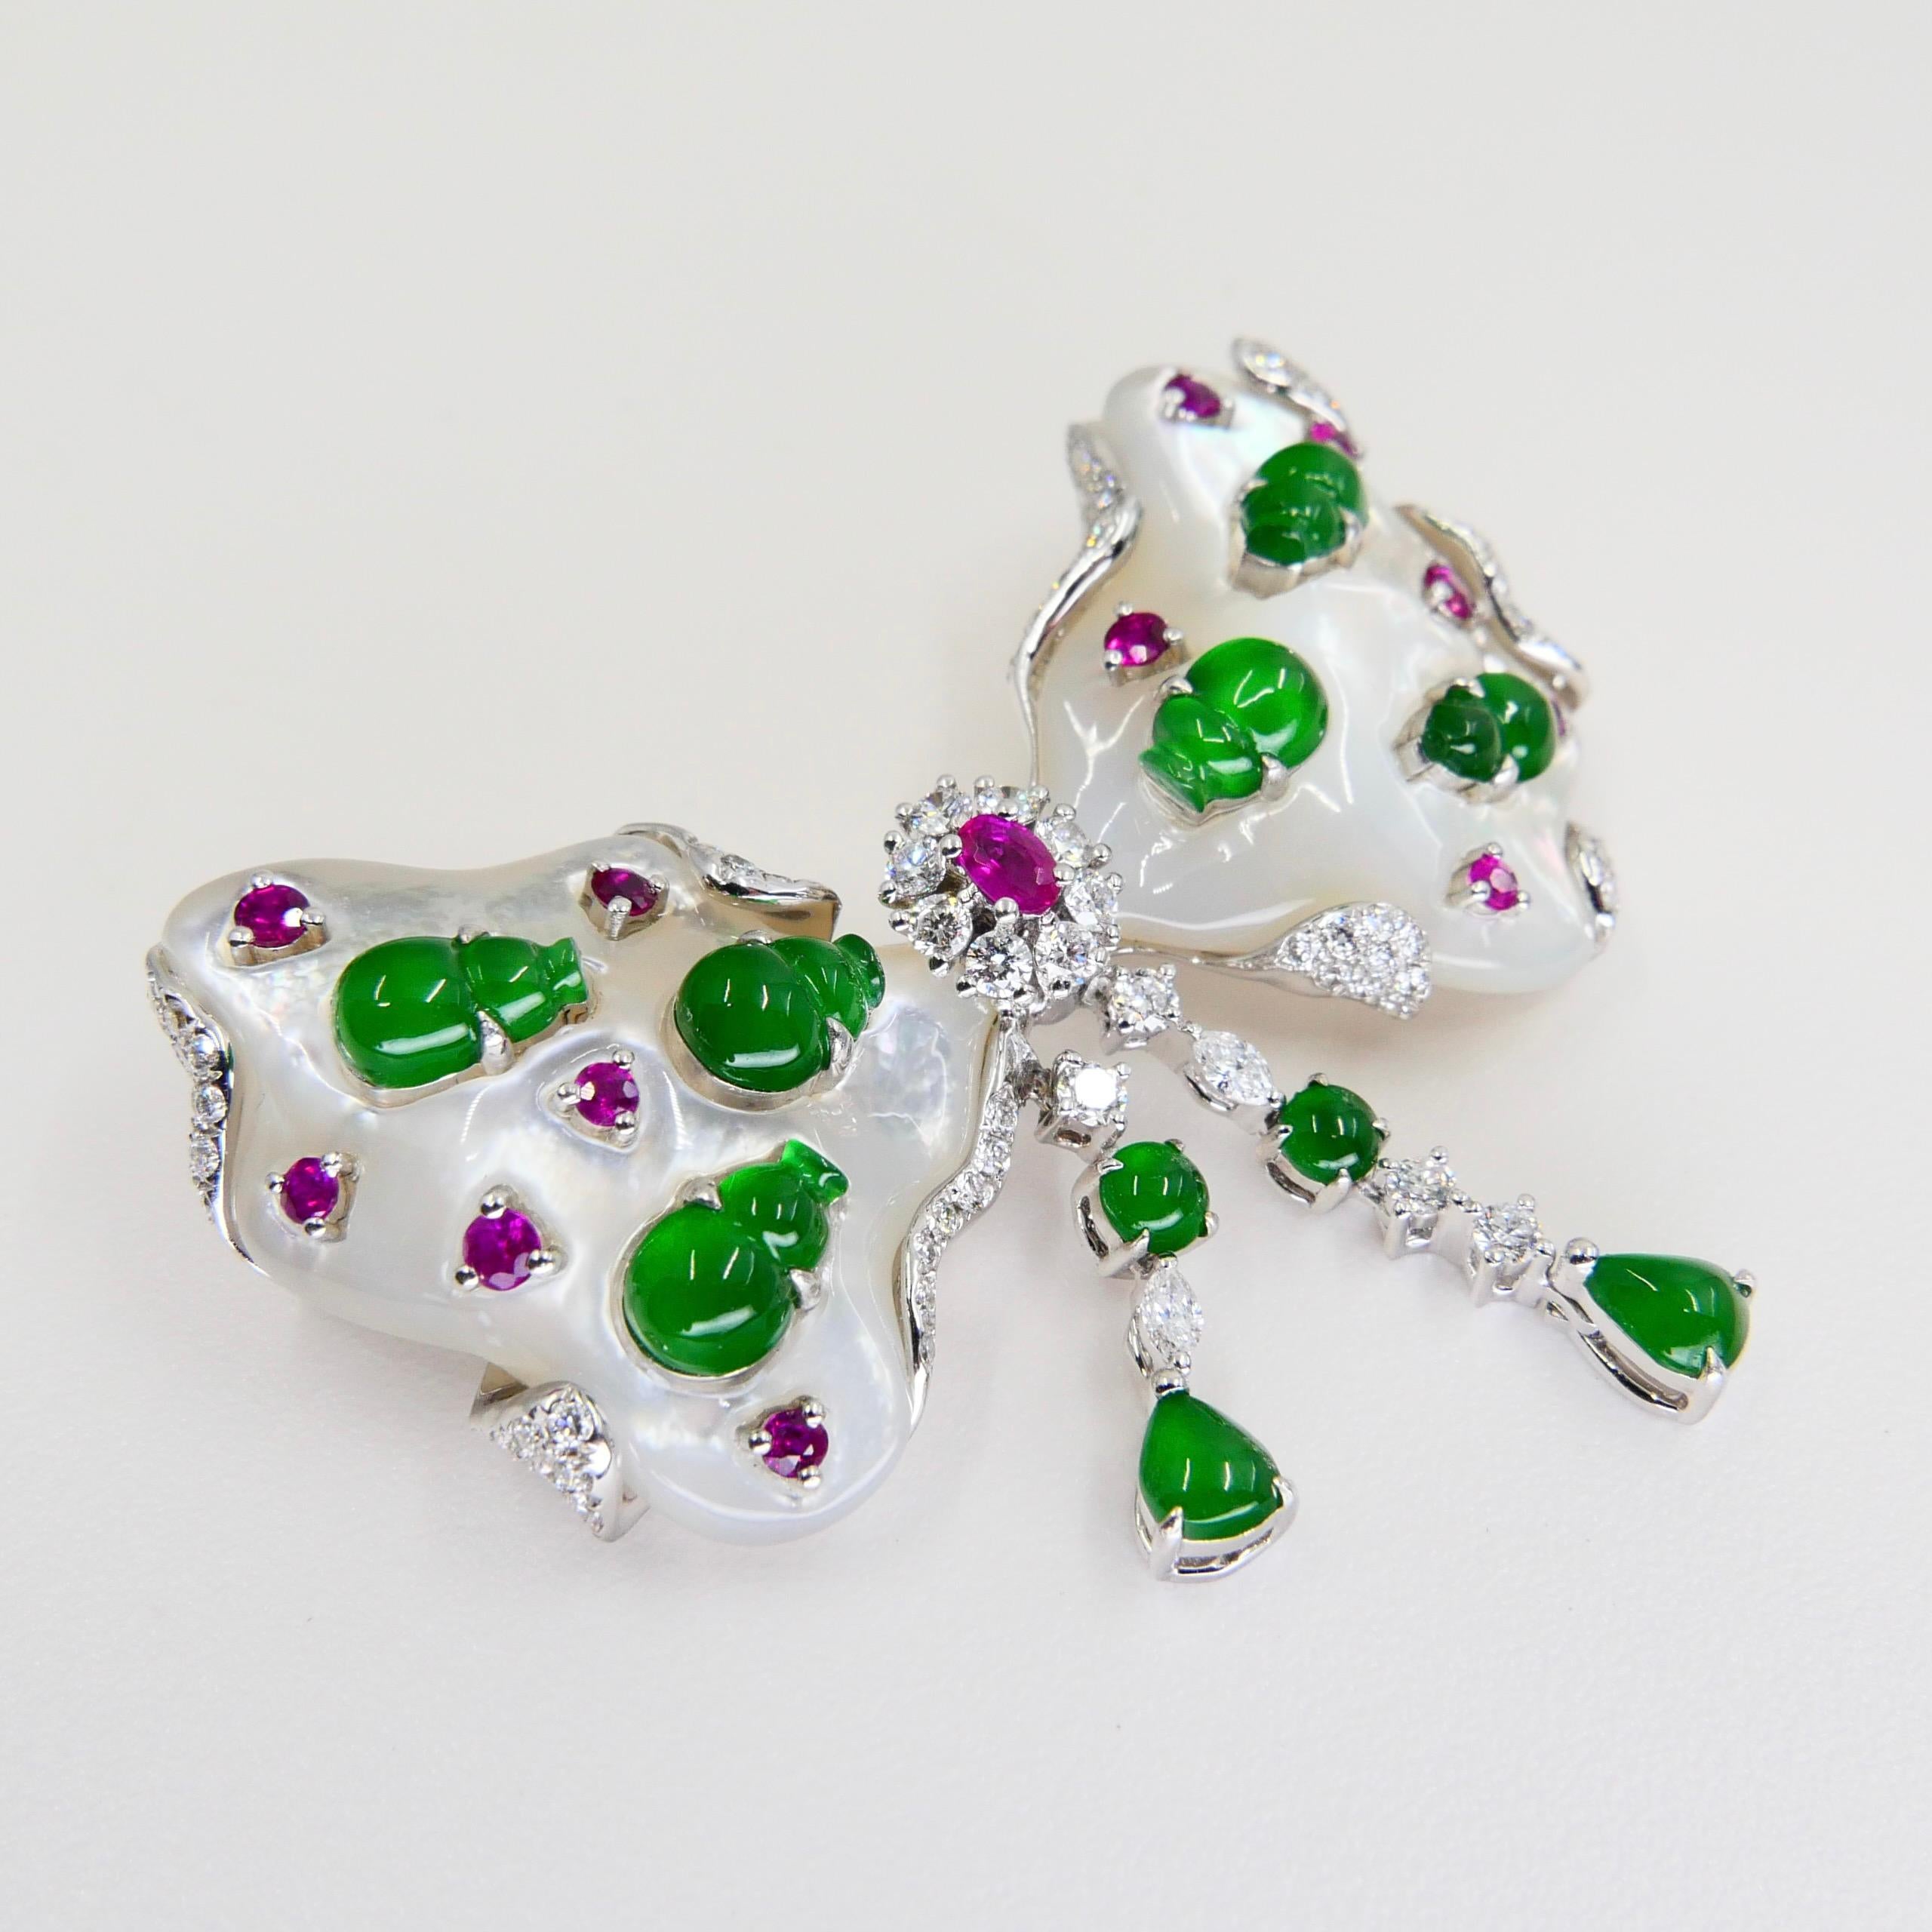 Certified Imperial Green Jadeite Jade Bow, Ruby, Diamond Pendant & Brooch, Glows 4